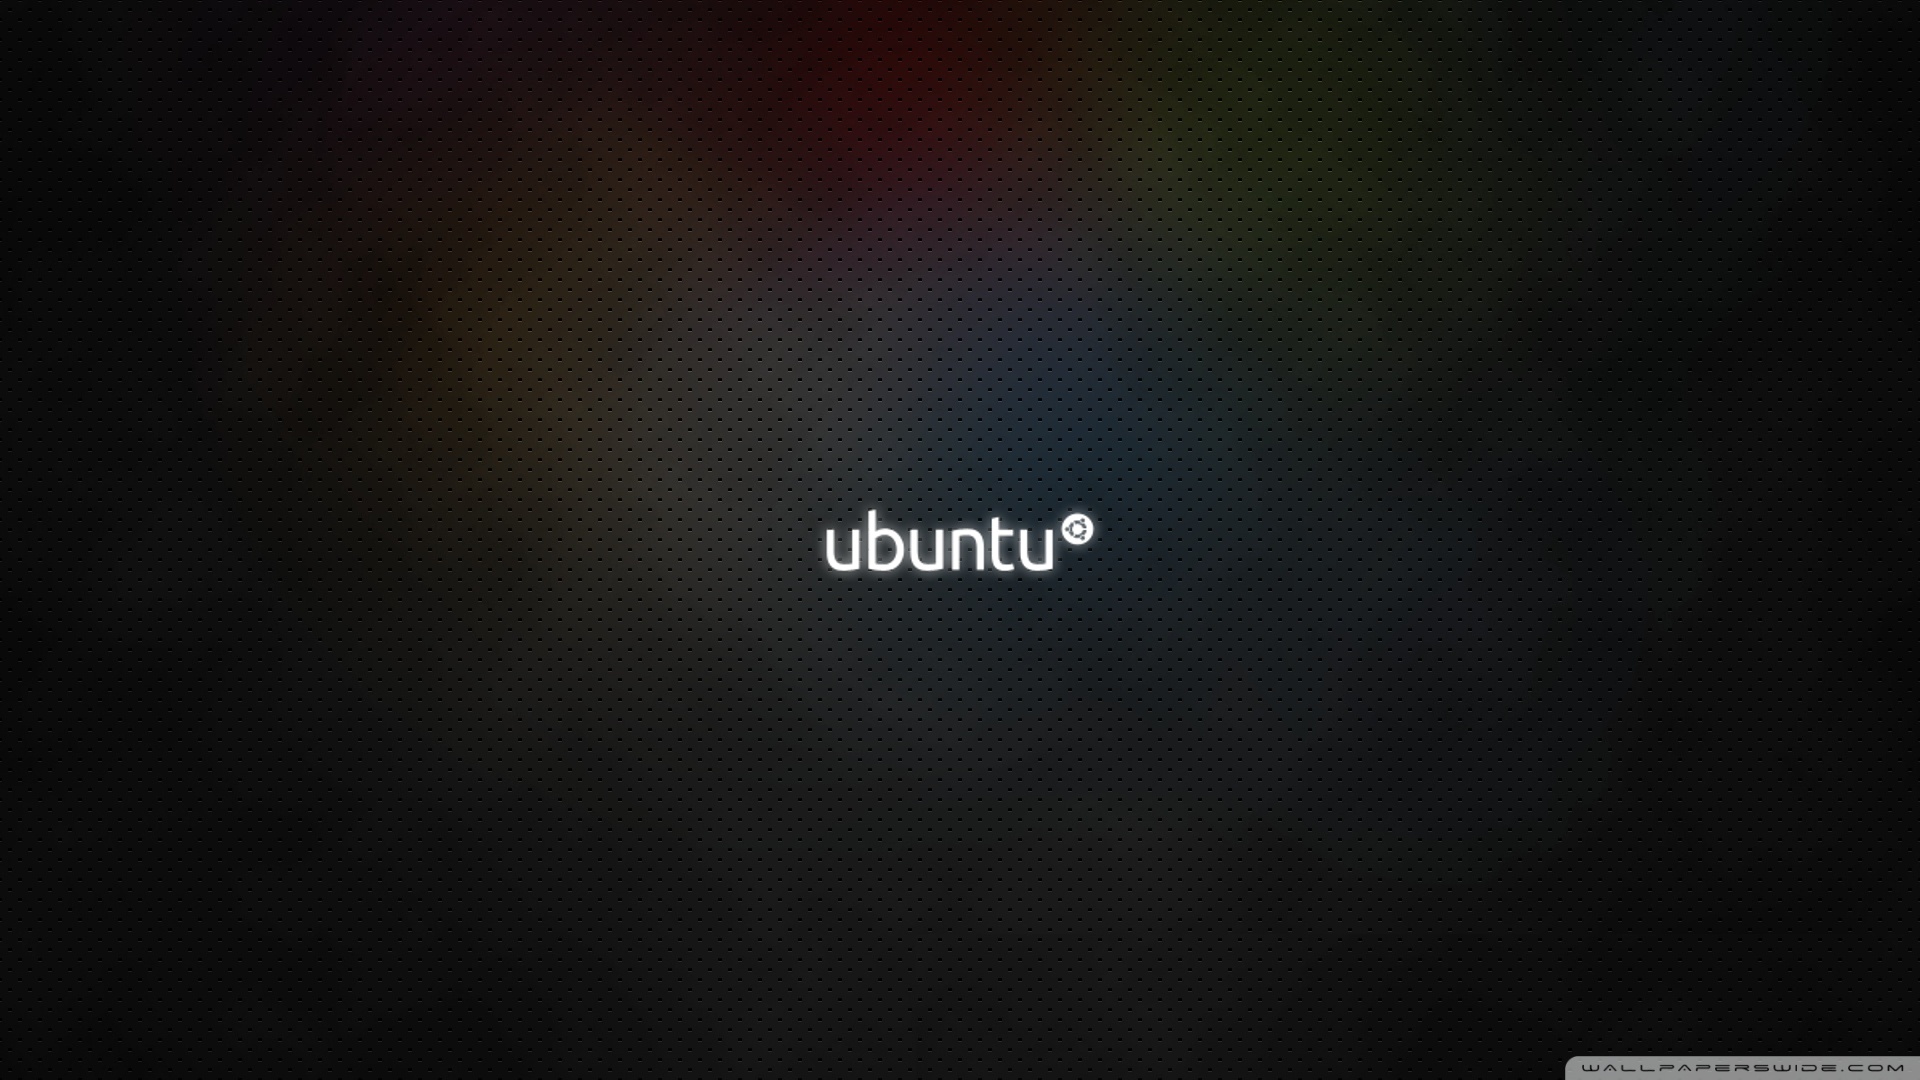 Ubuntu Wallpaper HD Early